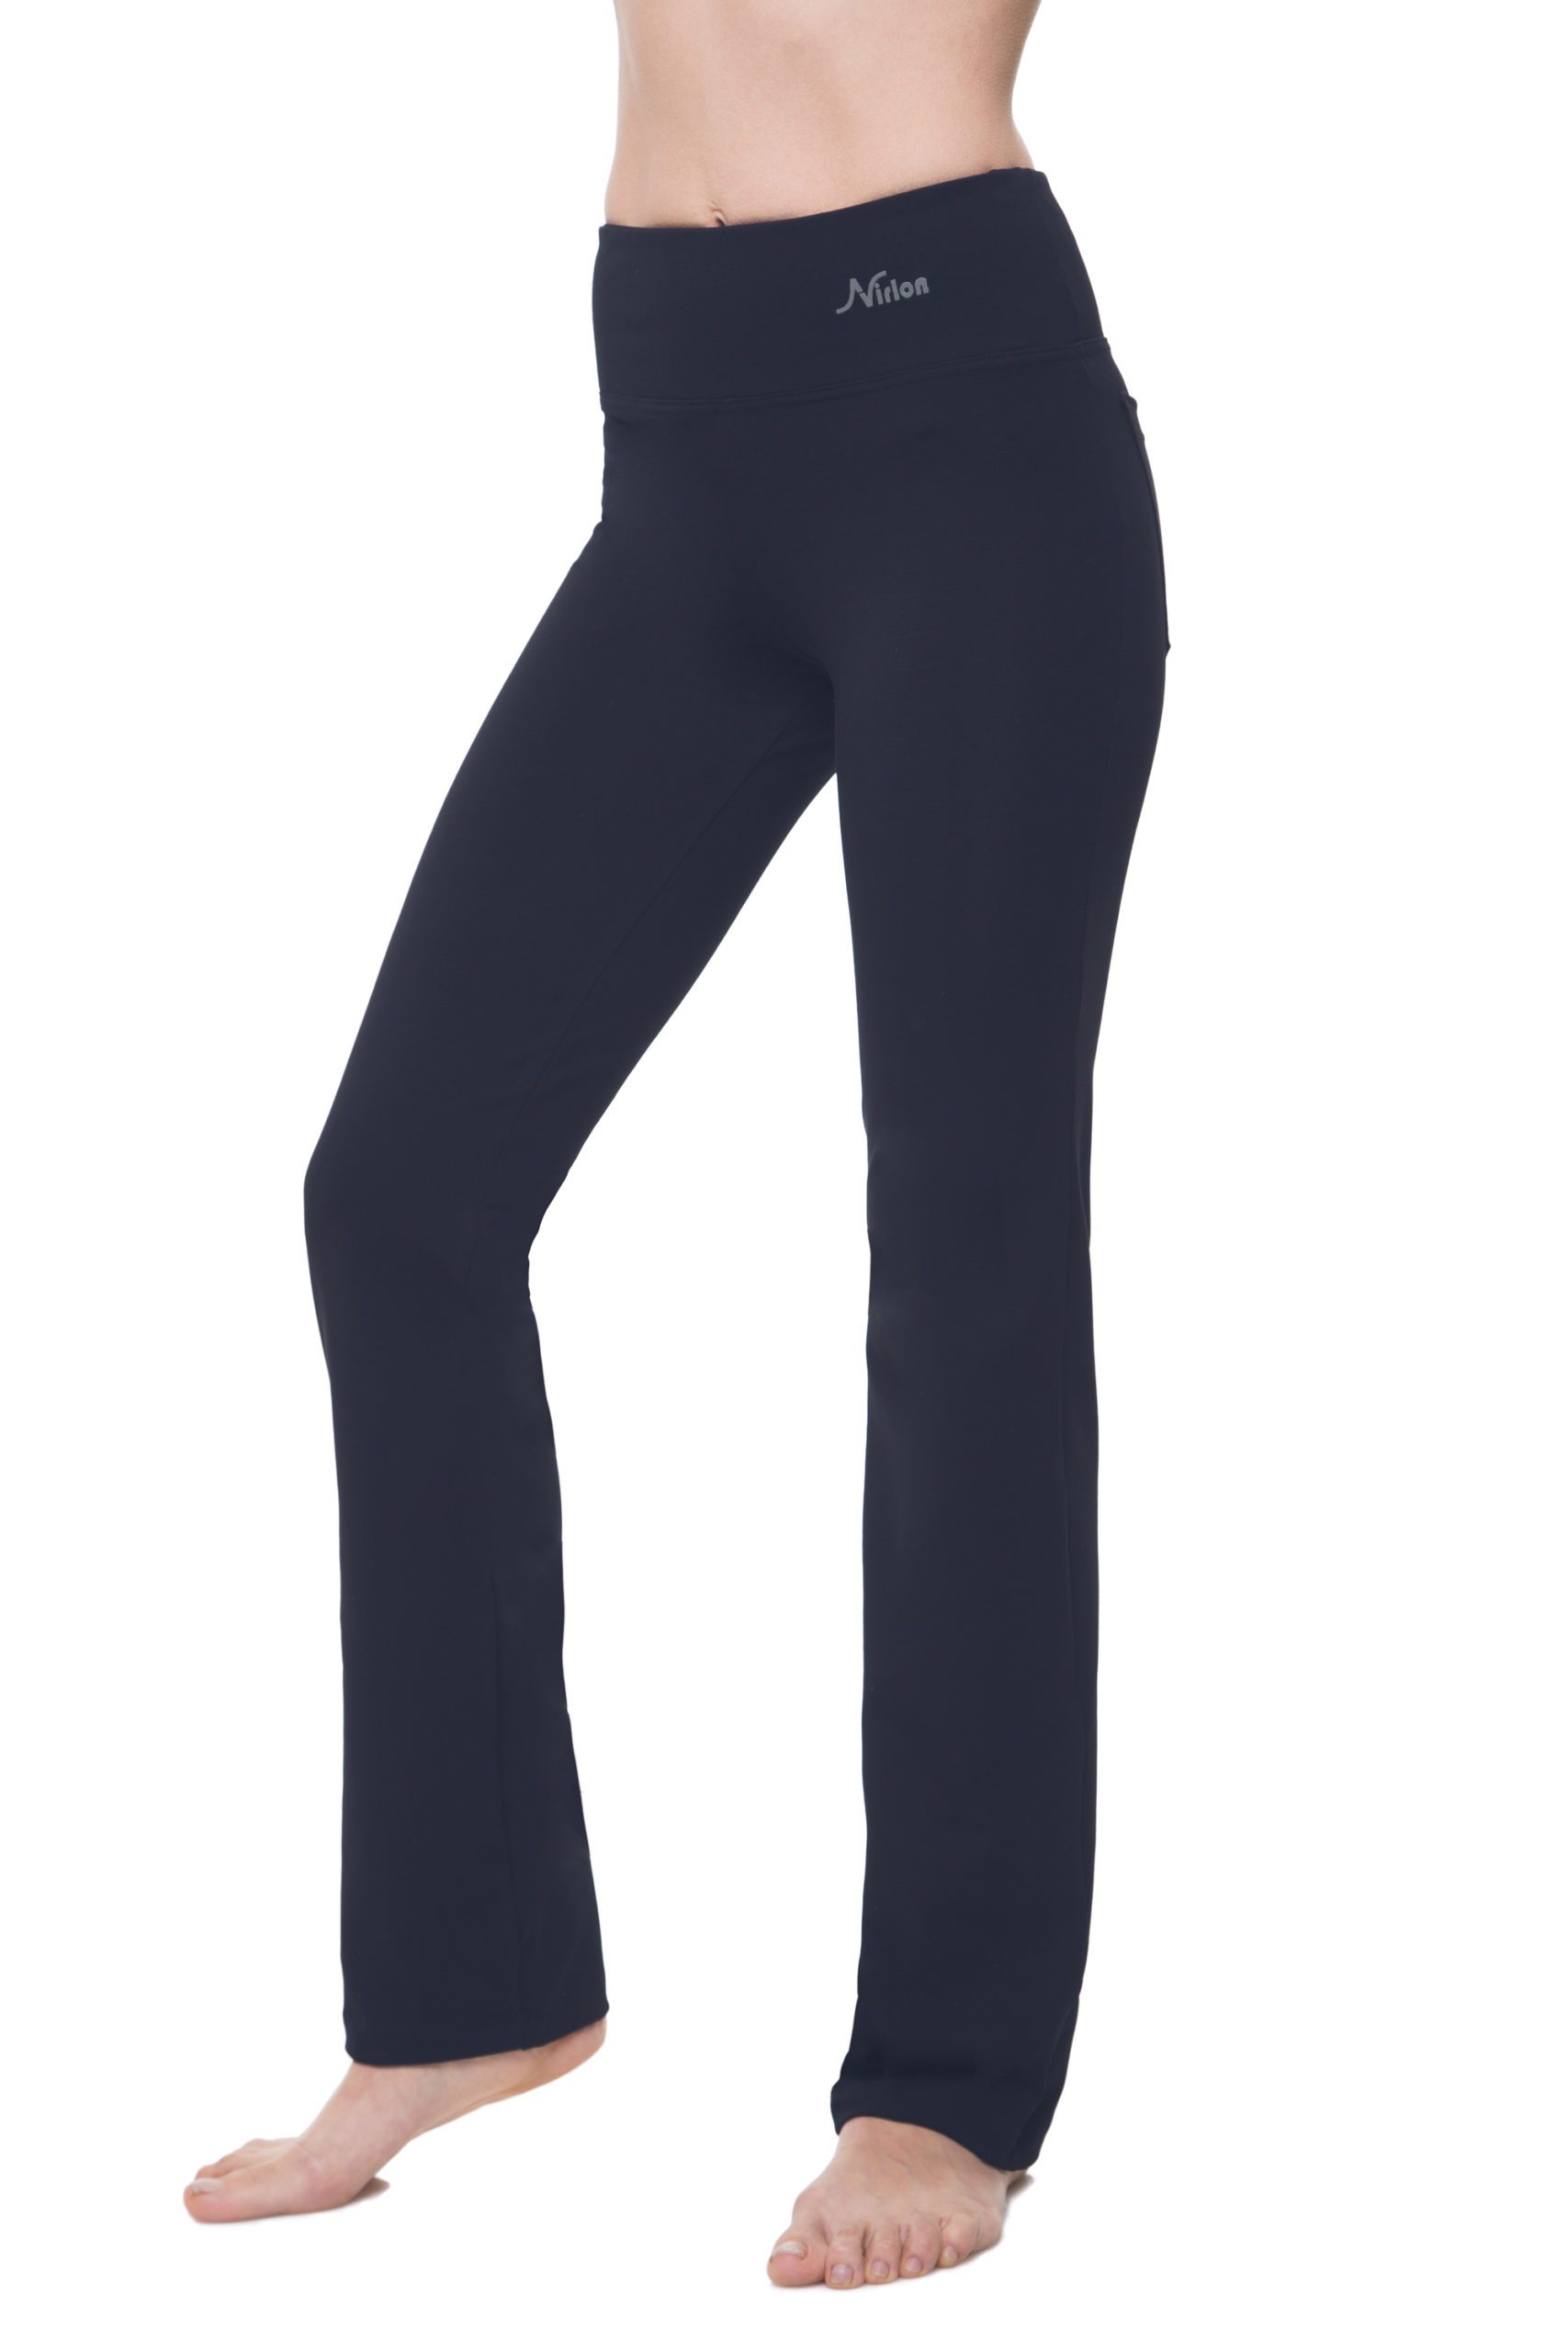 Straight Leg Yoga Pants With Pockets for Women - Navy Blue - NIRLON